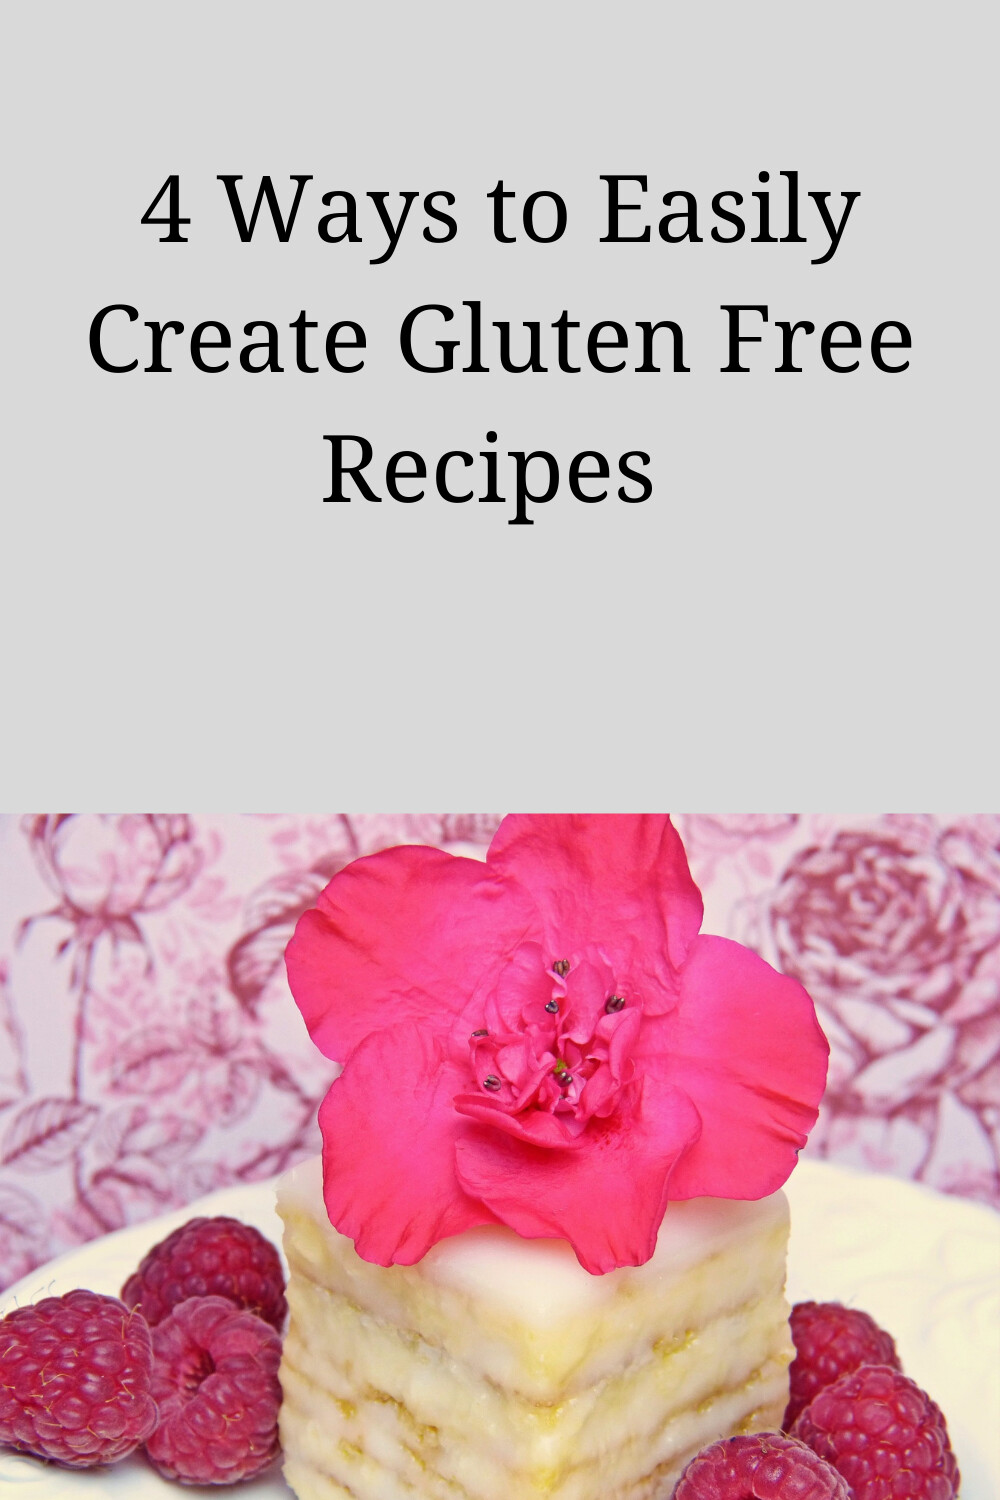 4 Ways to Easily Create Gluten Free Recipes